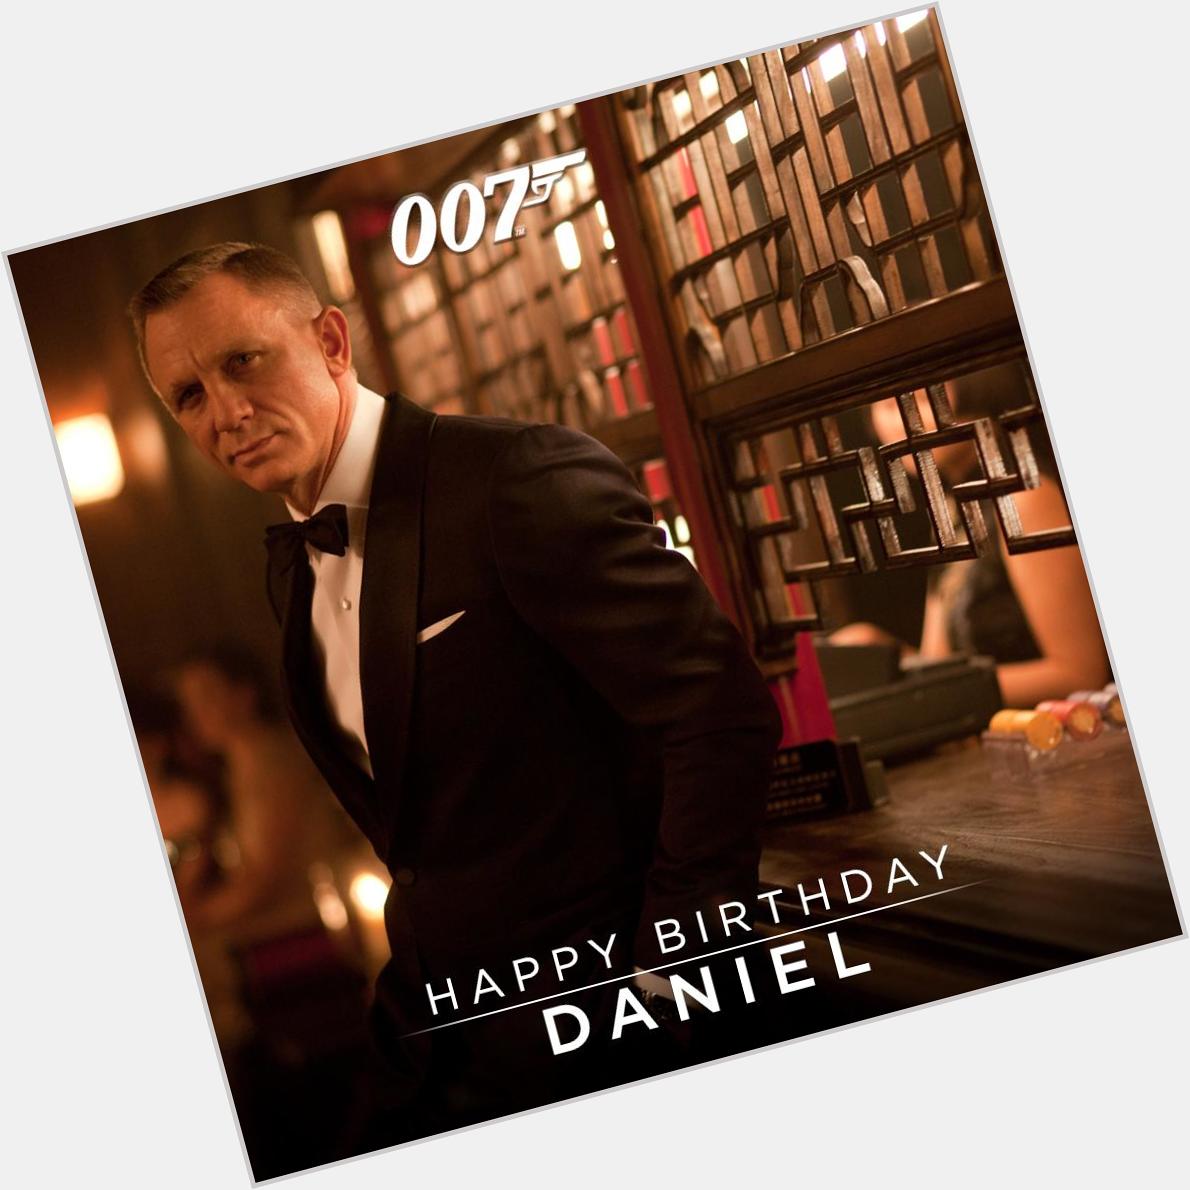 Happy birthday to our Daniel Craig! 